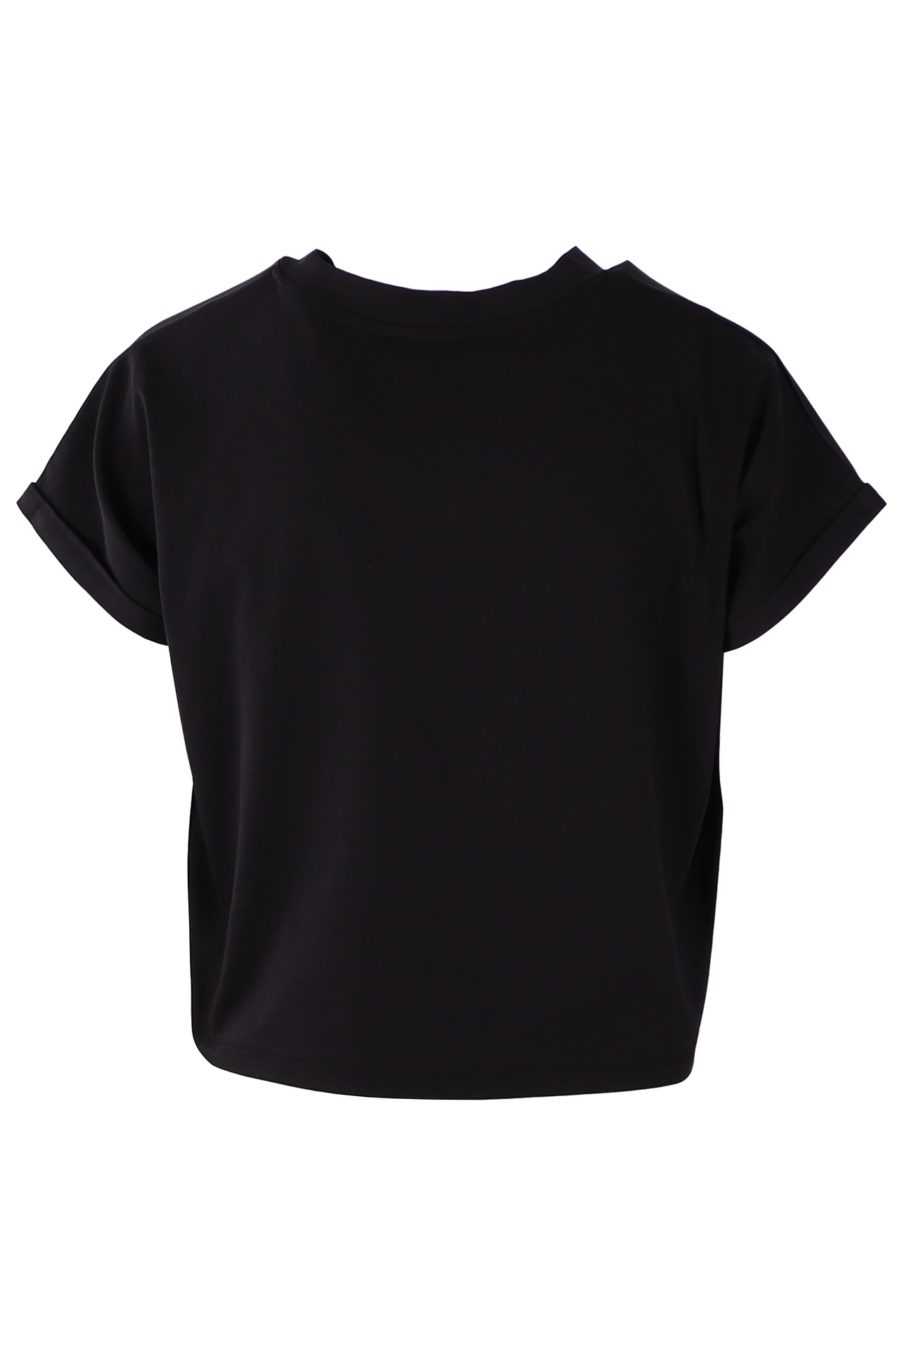 T-shirt Balmain noir avec petit logo - fc1a3e27cebc87179f13cbd8178bc6b782646bba